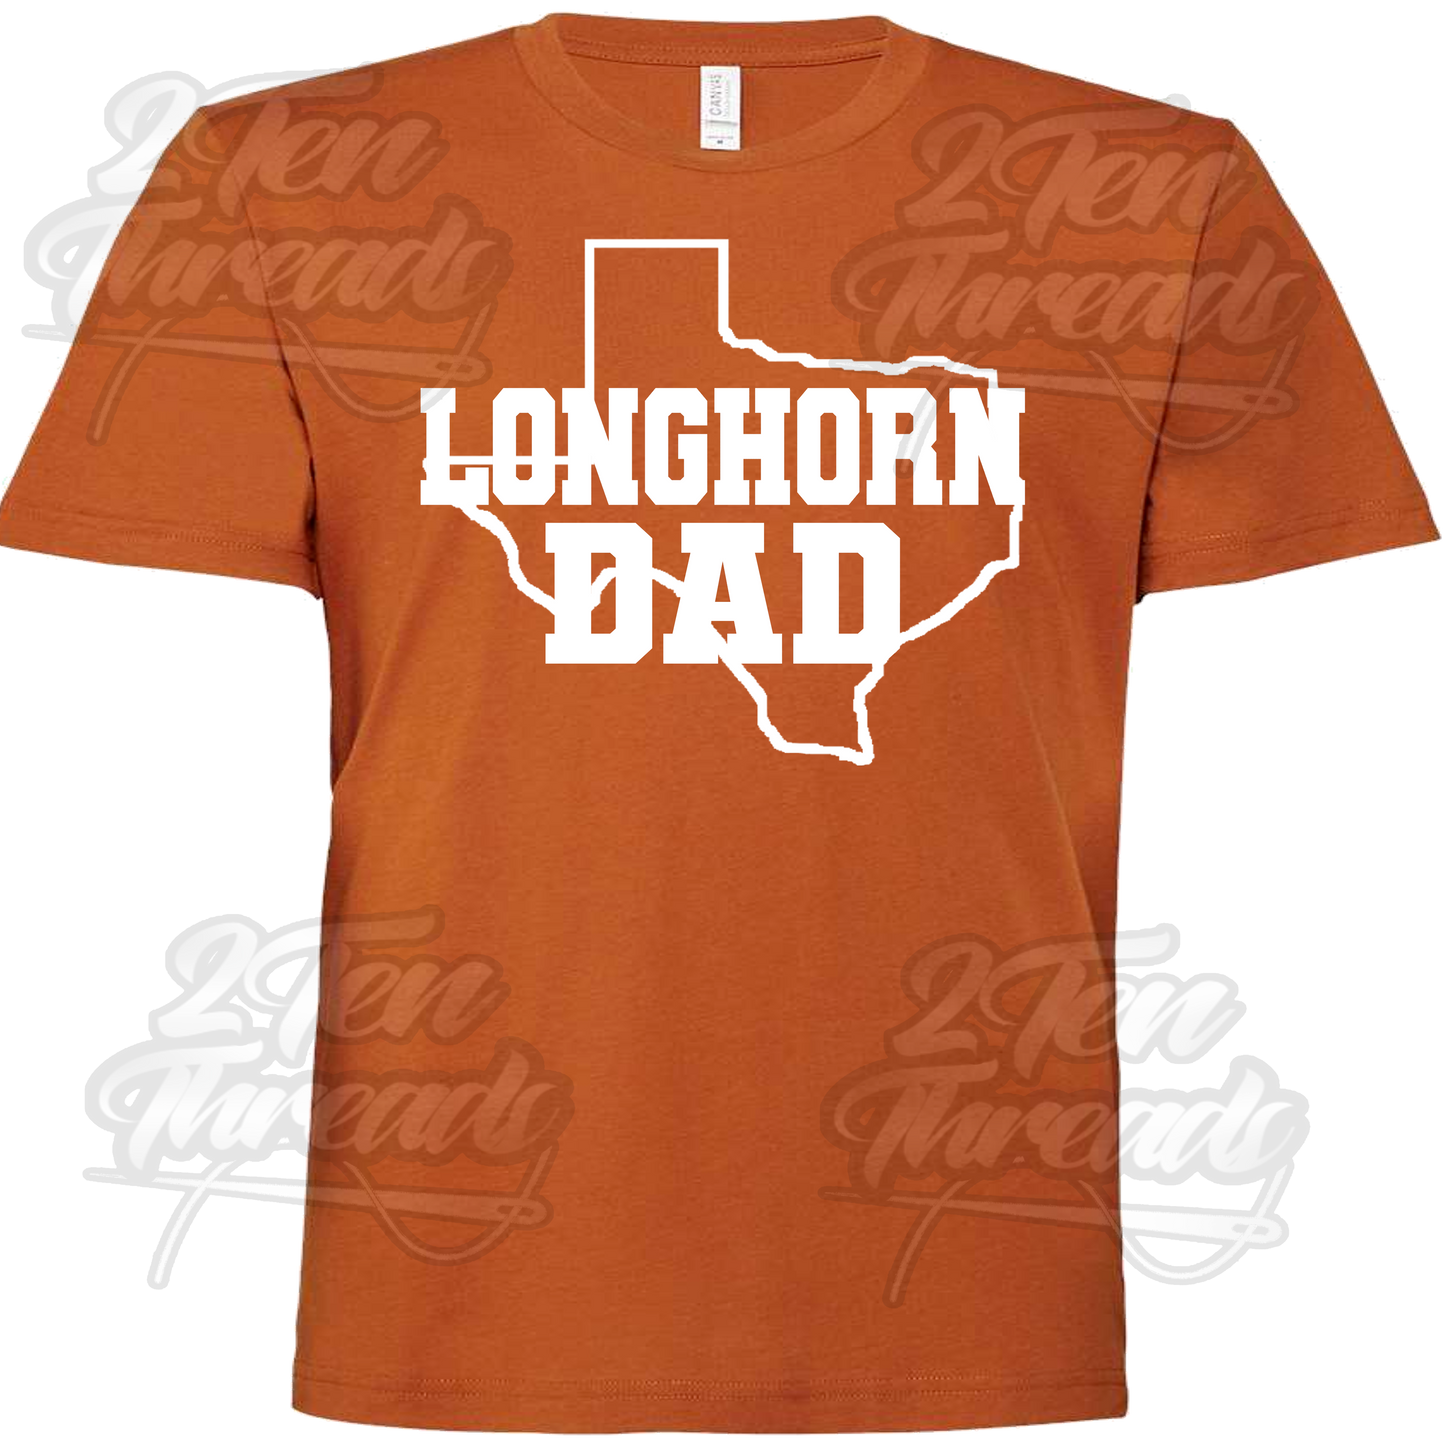 Longhorn Dad T shirt